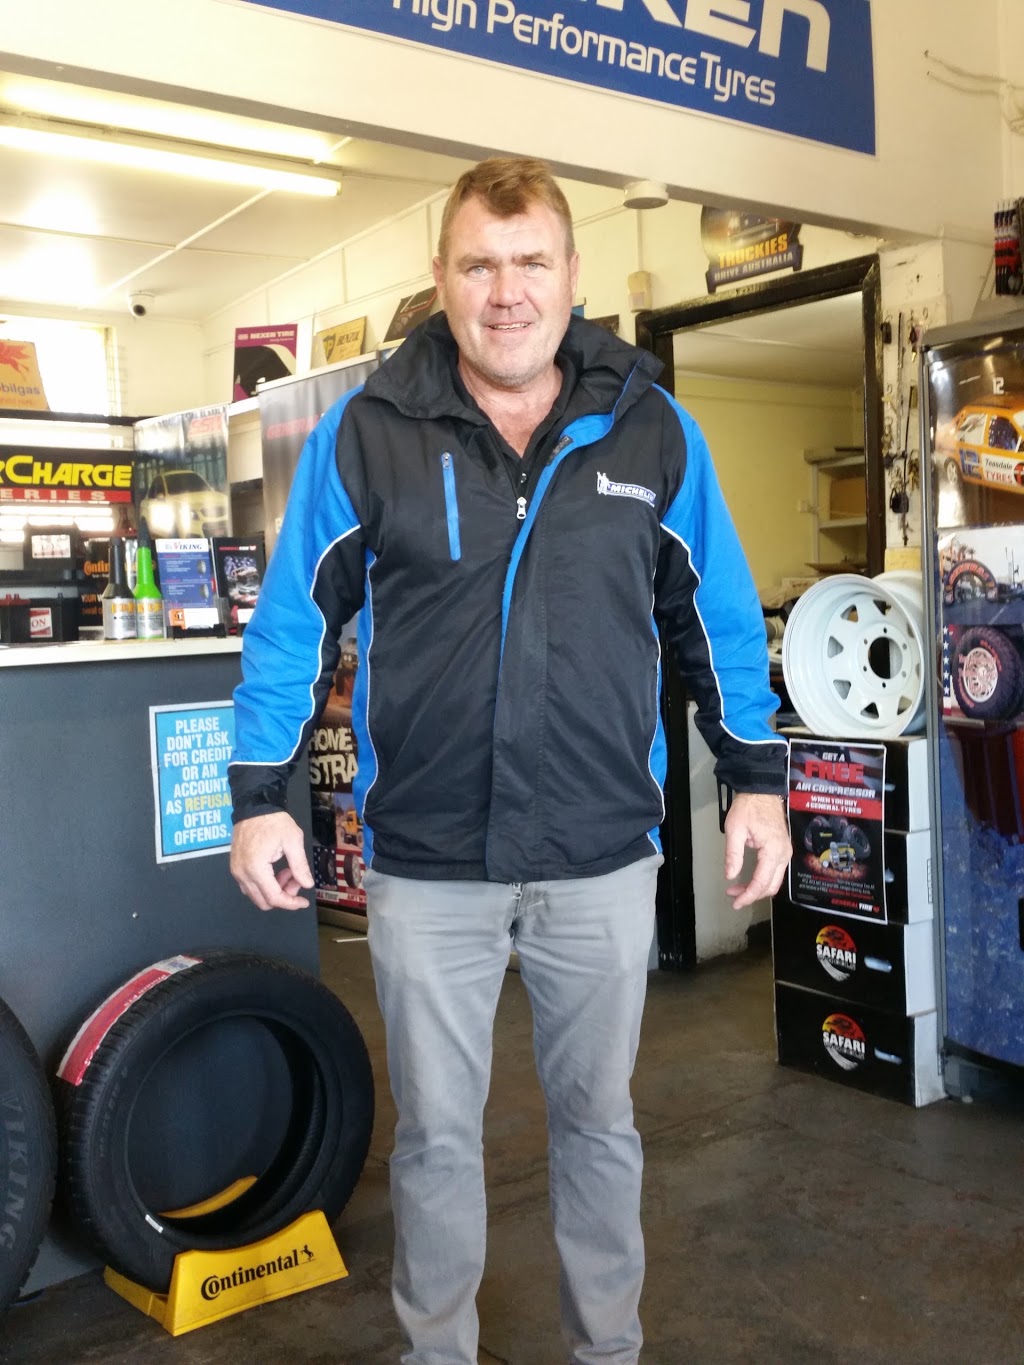 Teasdale Tyres | car repair | 32 Cessnock Rd, Weston NSW 2326, Australia | 0249371596 OR +61 2 4937 1596